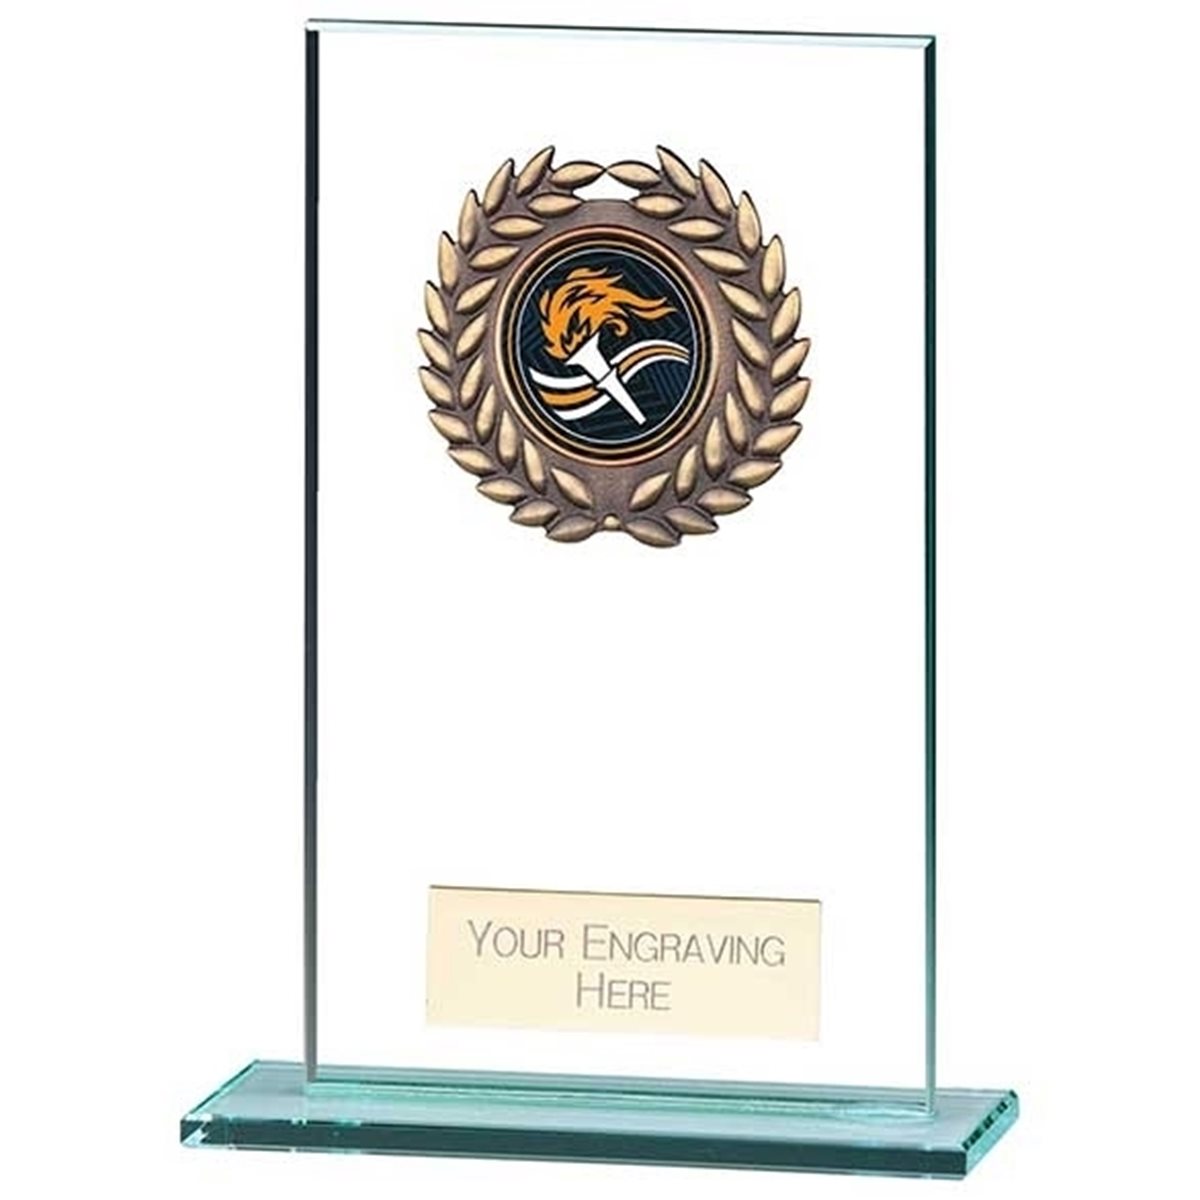 Economy Glass Award with Gold Wreath CR22536